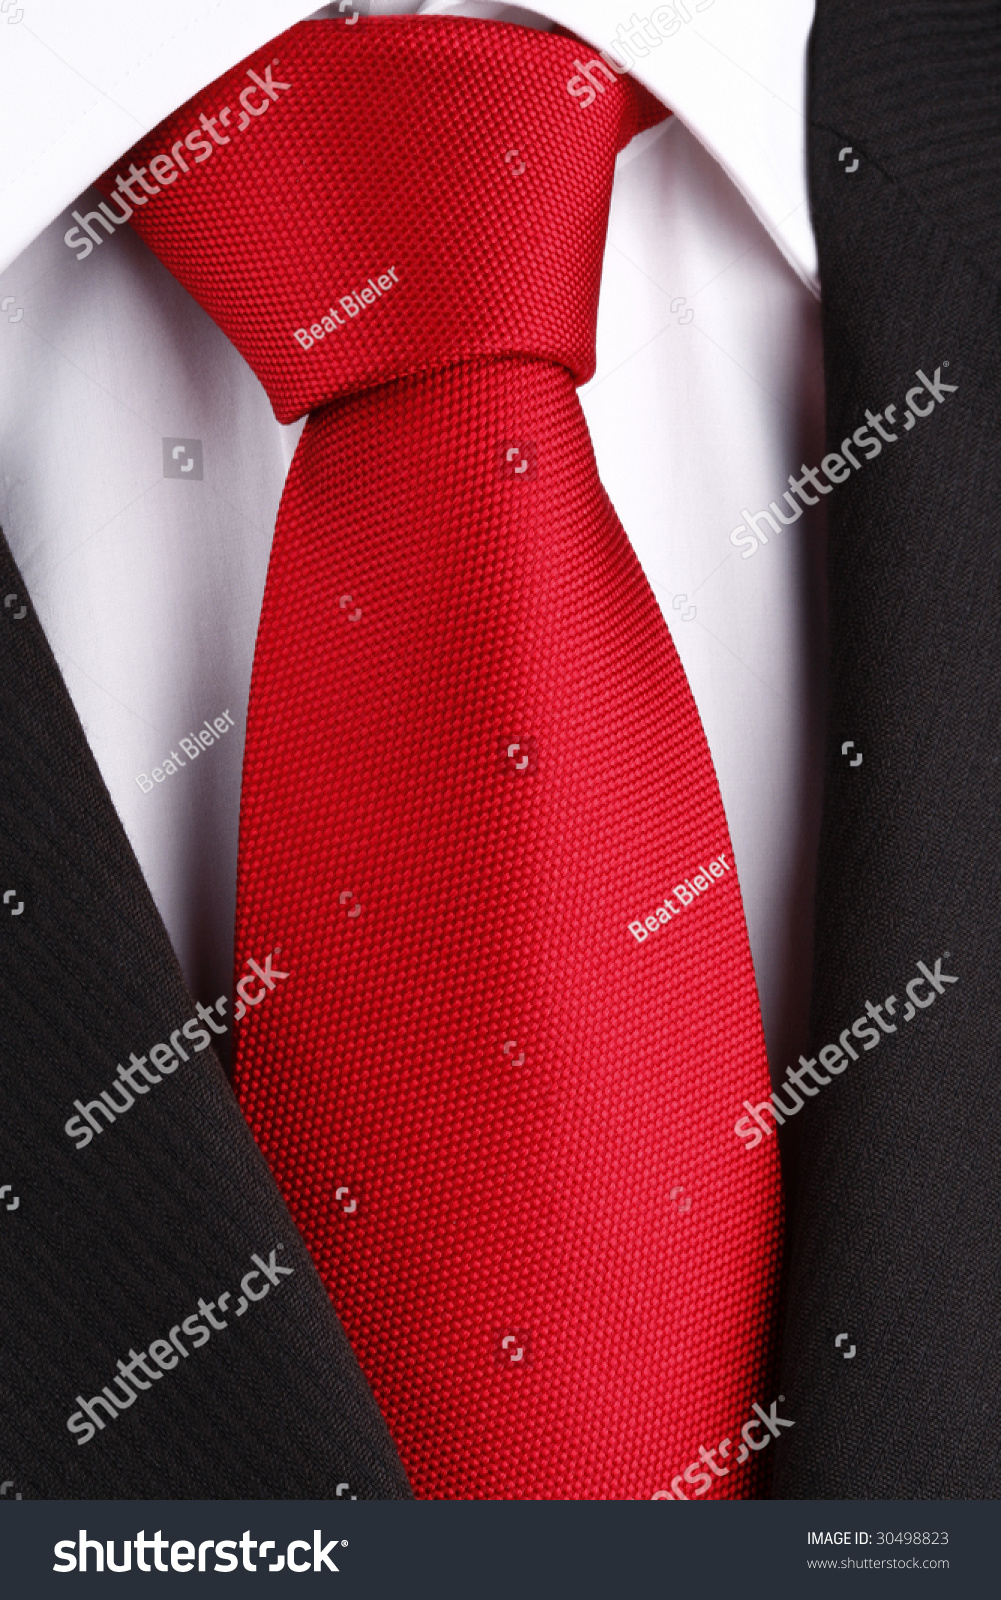 Bright Red Tie On White Shirt Stock Photo 30498823 - Shutterstock